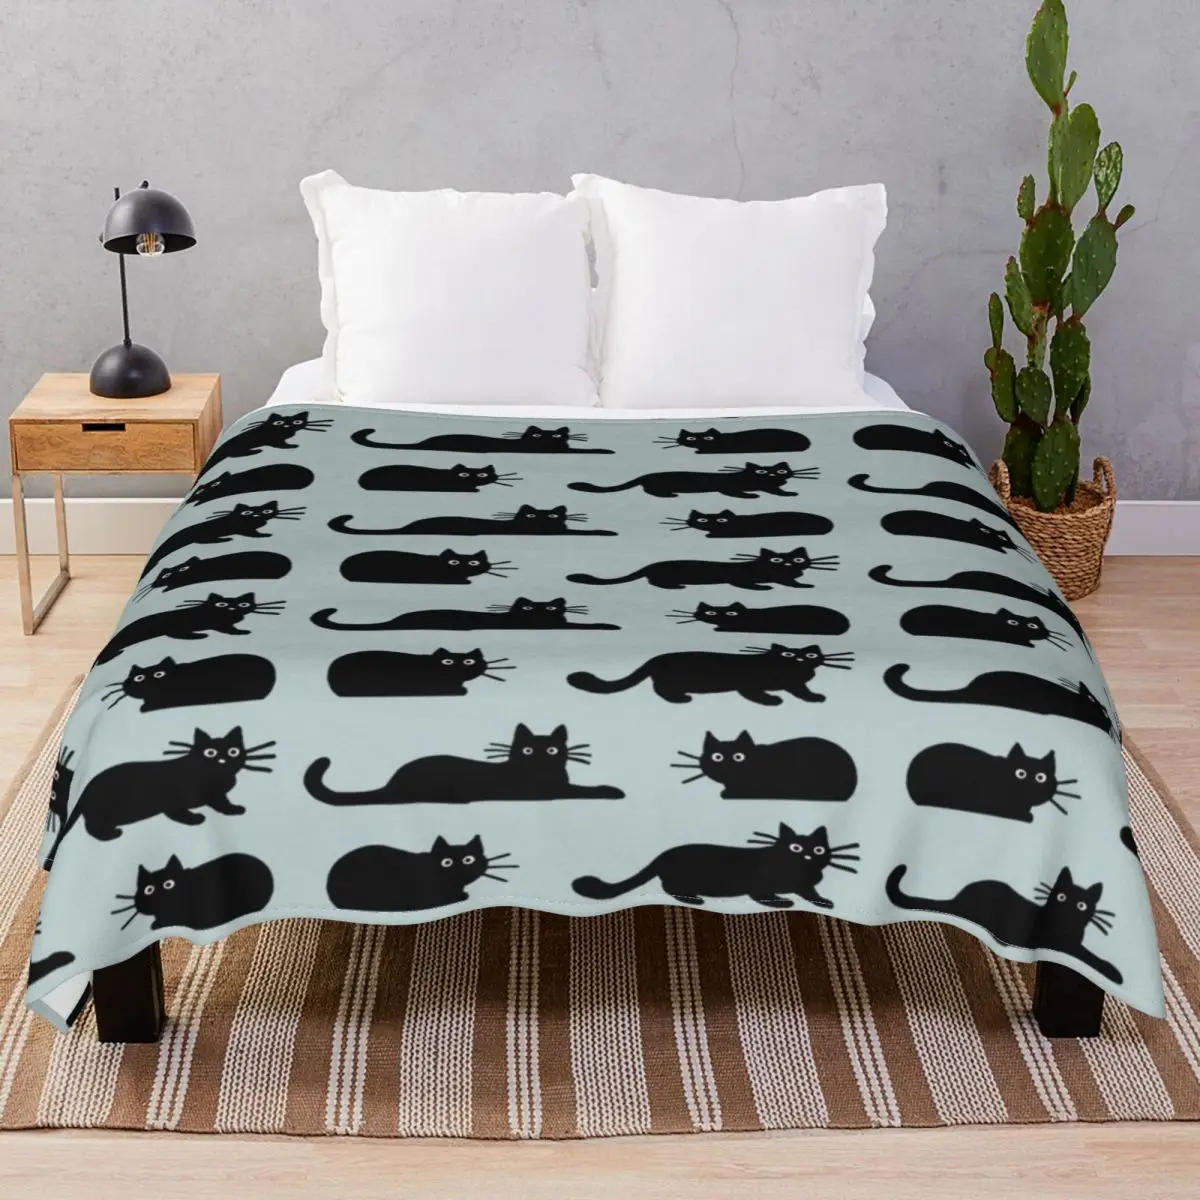 Black Cat Blankets Flannel Winter Multi-function Throw Blanket for Bedding Sofa Travel Cinema